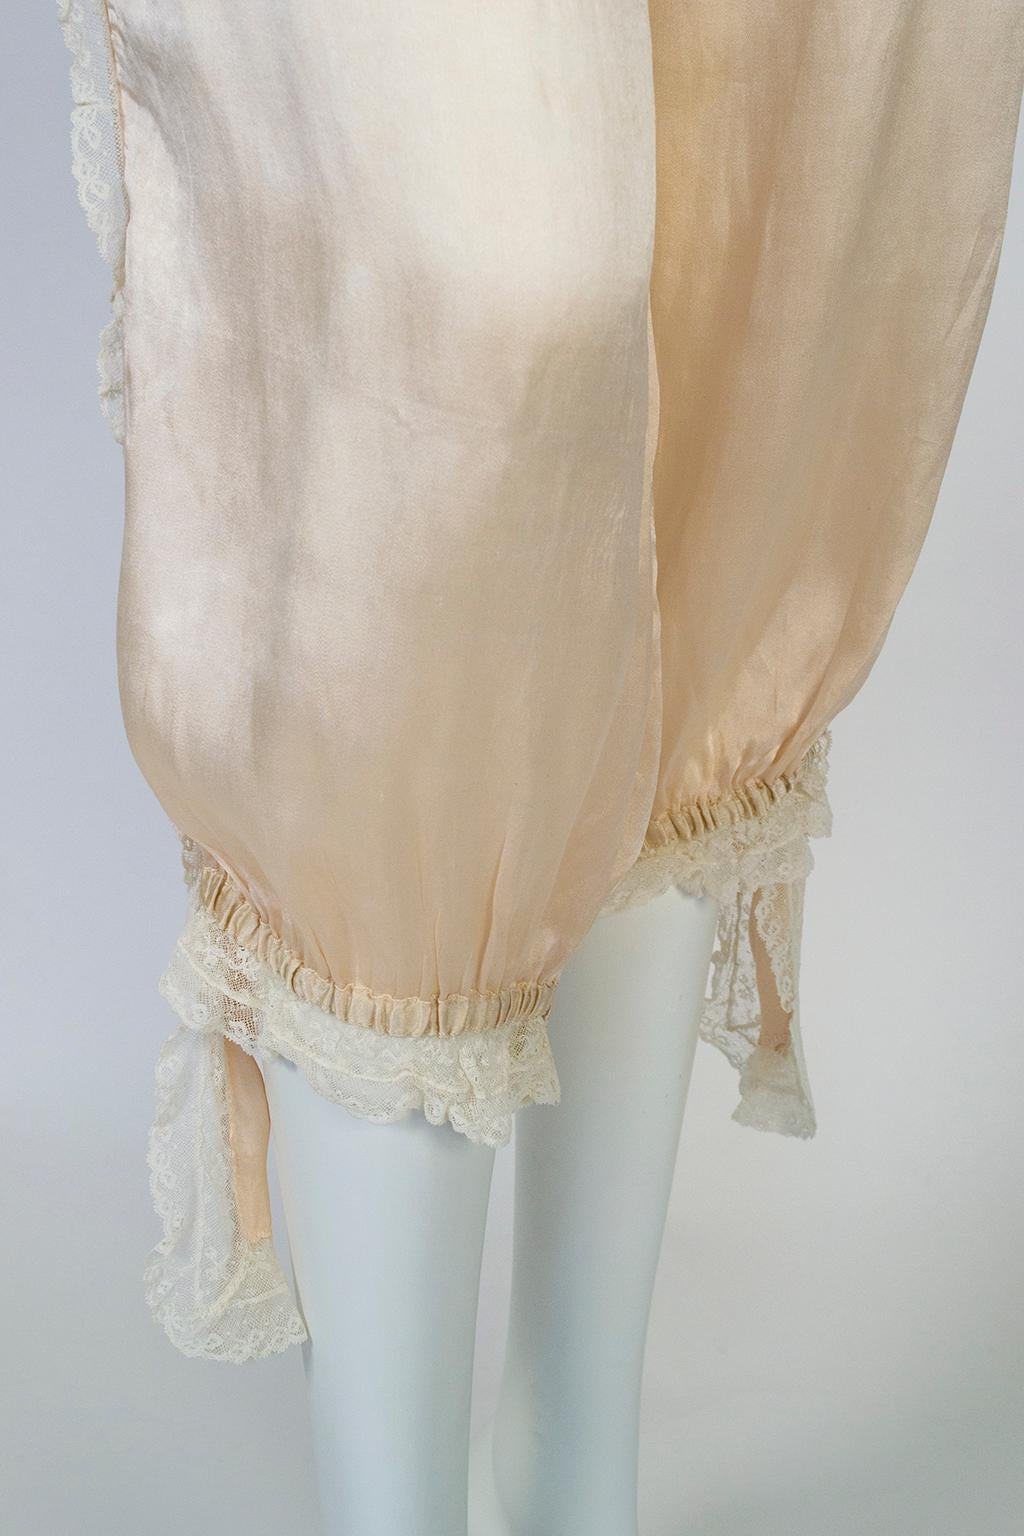 Edwardian Blush Silk Charmeuse and Lace ¾ Bloomer Pantalettes - Medium, 1900s 4